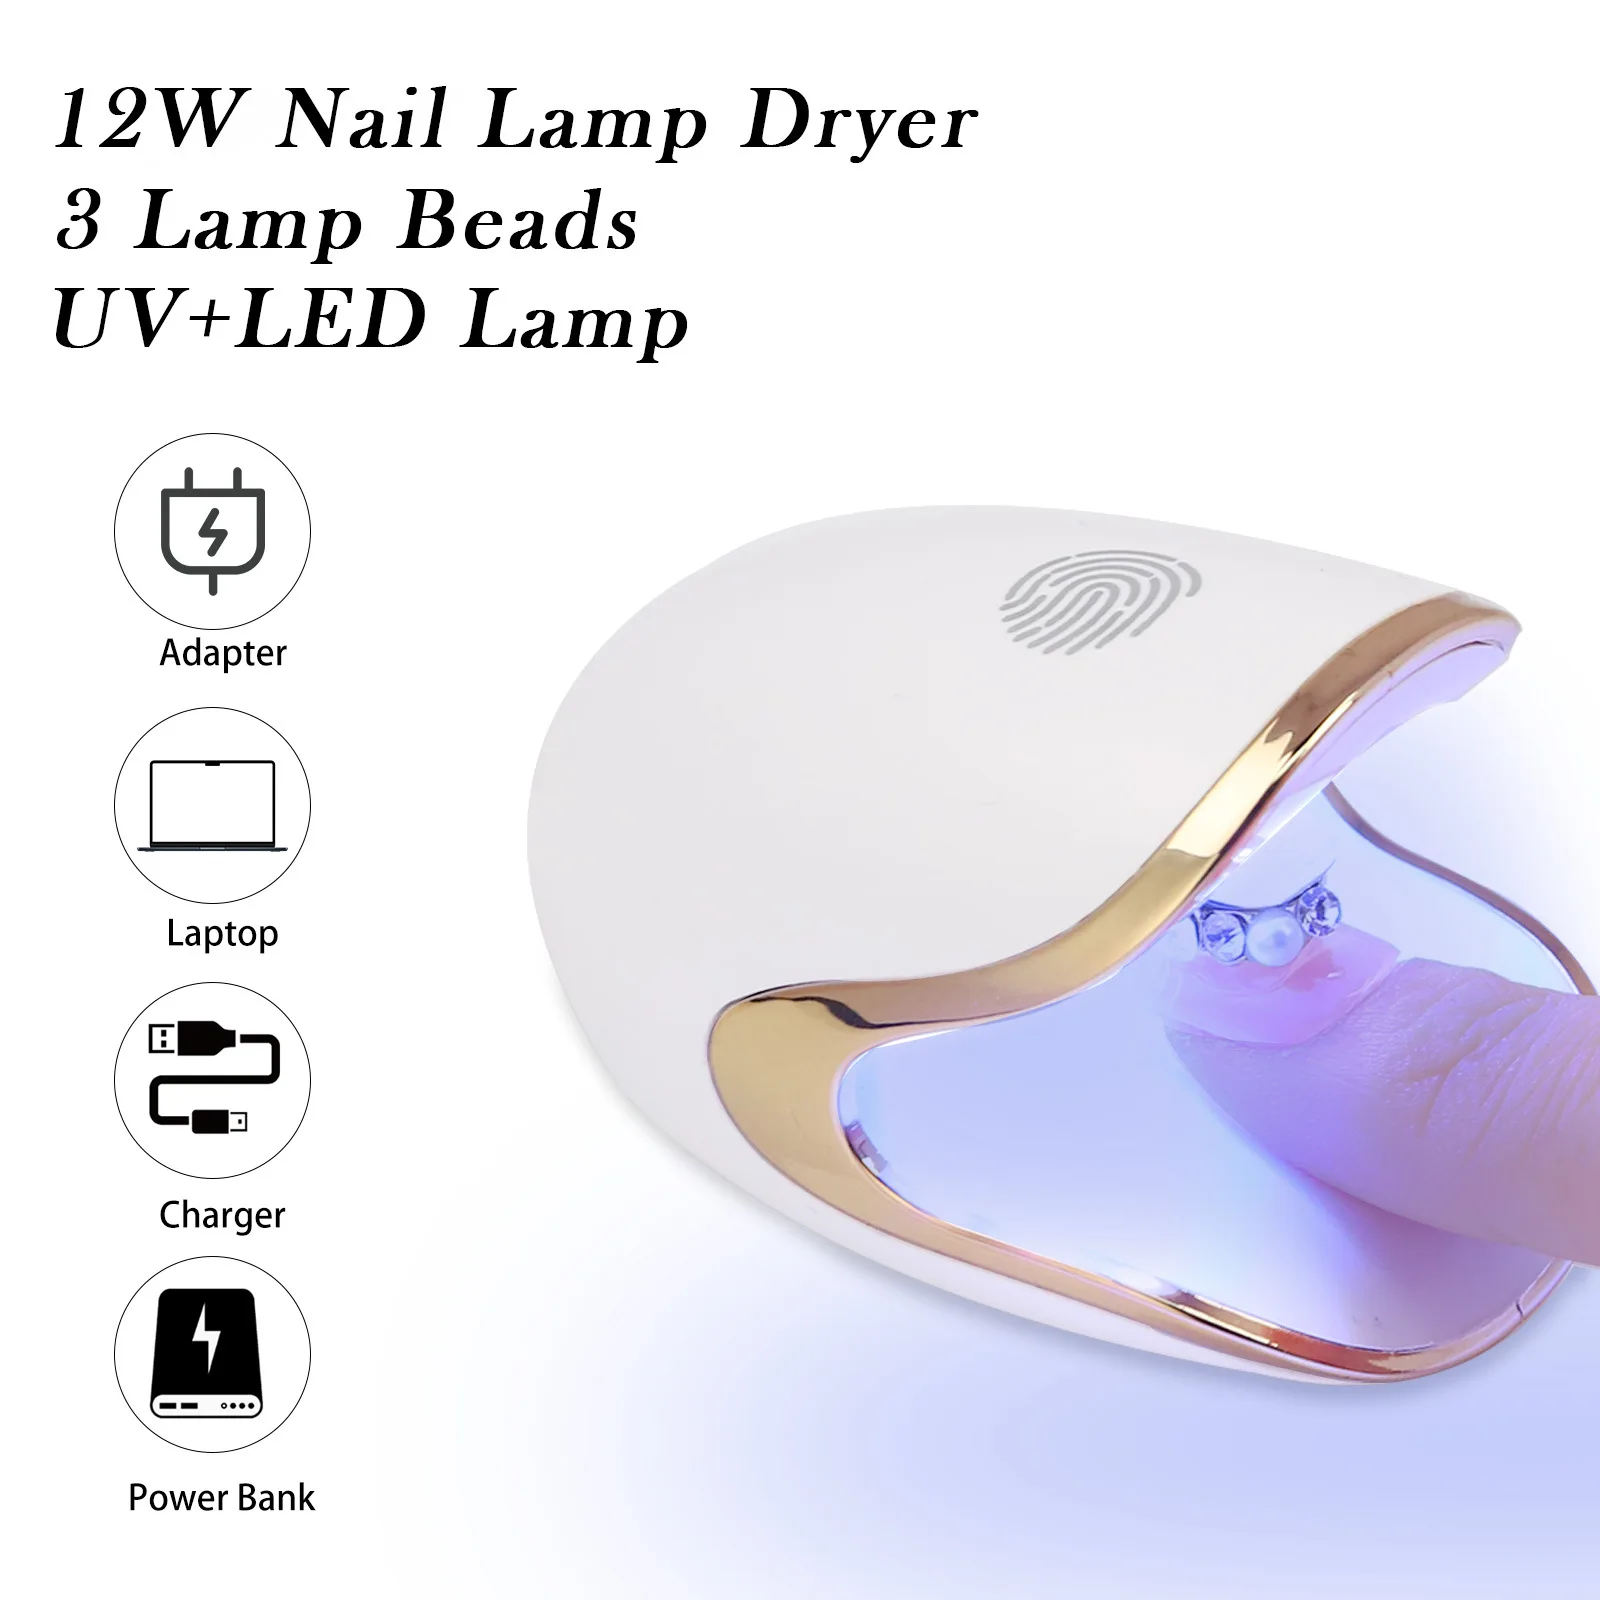 

12W Mini LED Nail Lamp Dryer USB UV Nail Art White Egg Shape Design Fast Drying Gel Glue For False Nails Portable Cured Manicure